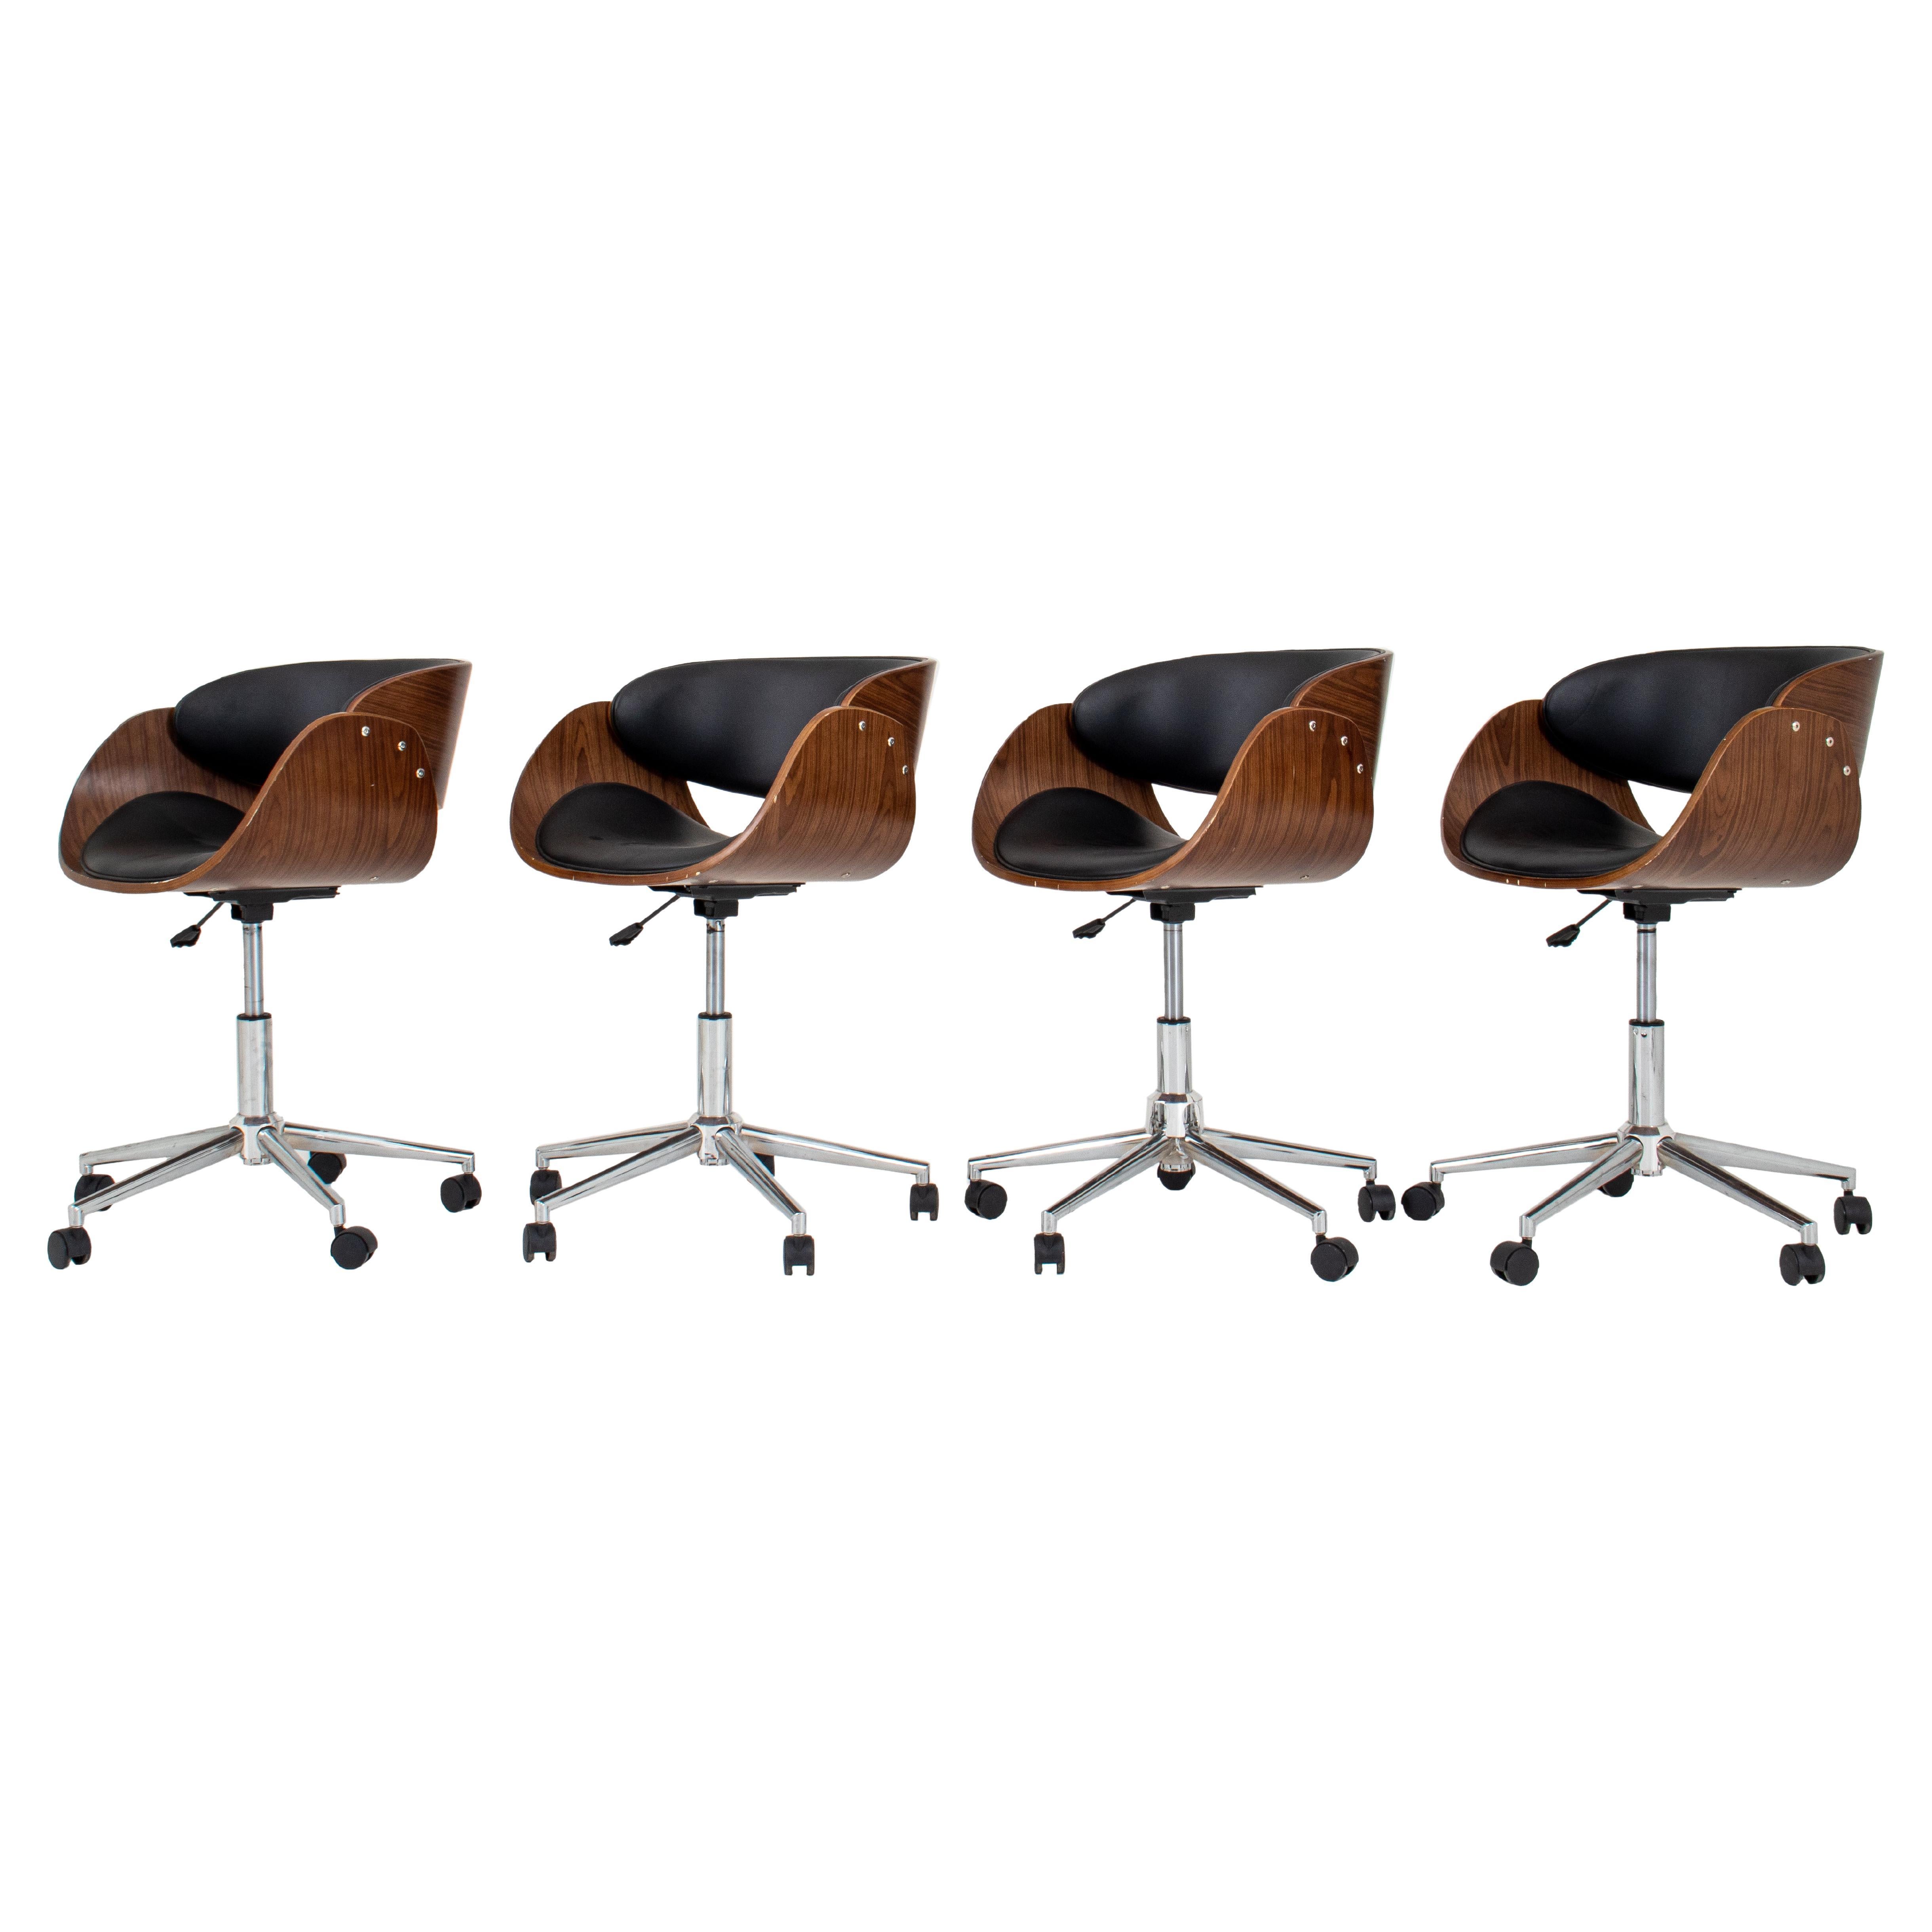 Mid-Century Modern Style Swivel Chairs, 4